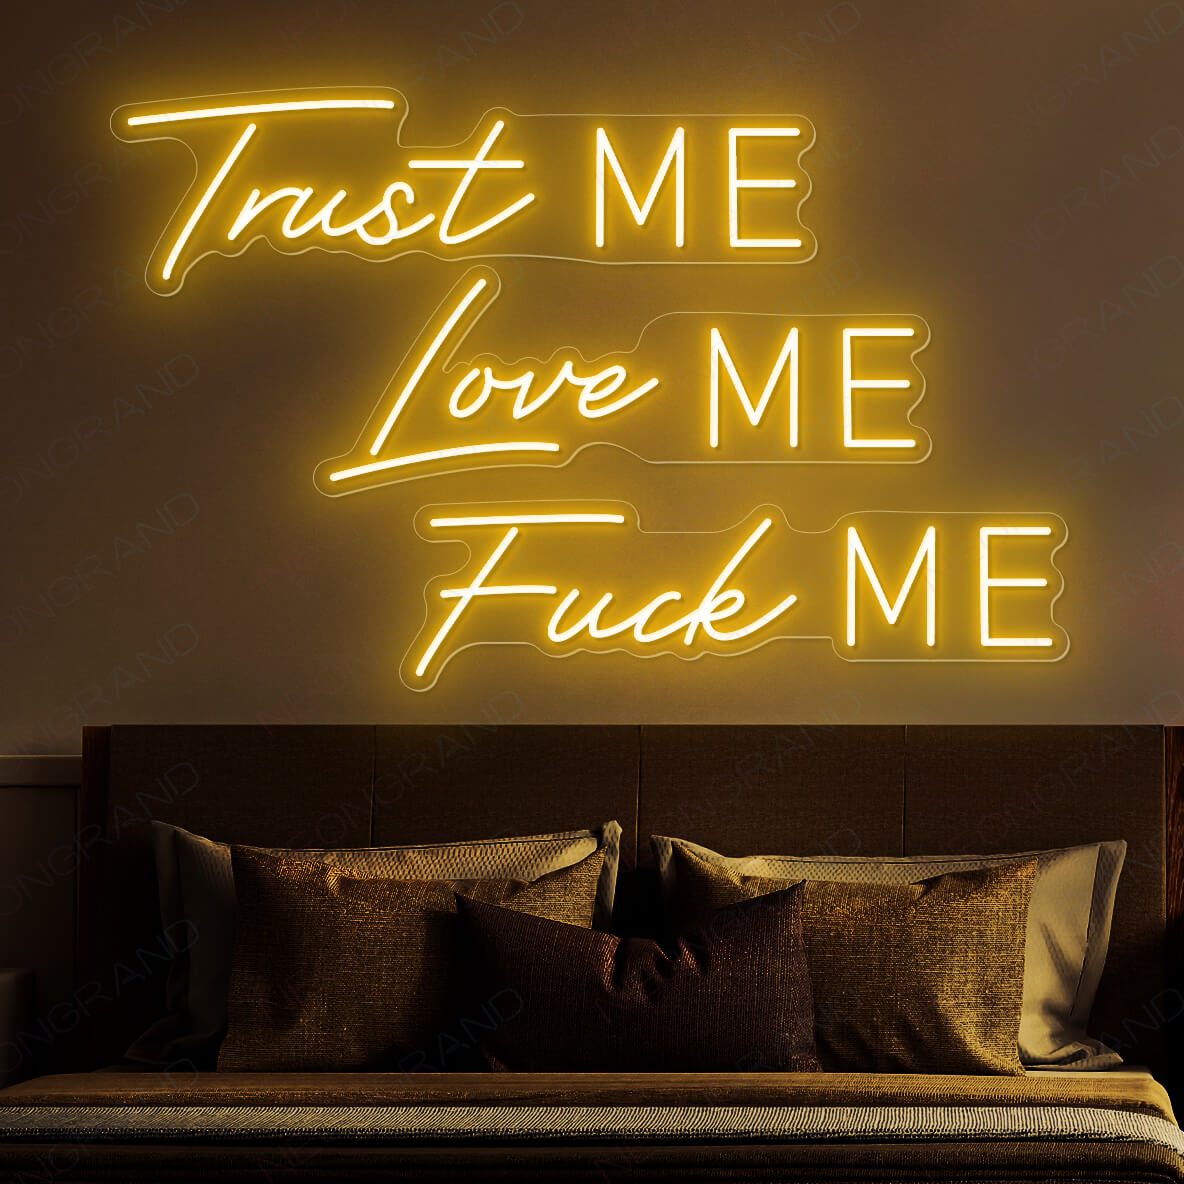 Trust Me Love Me Fuck Me Neon Sign orange yellow wm